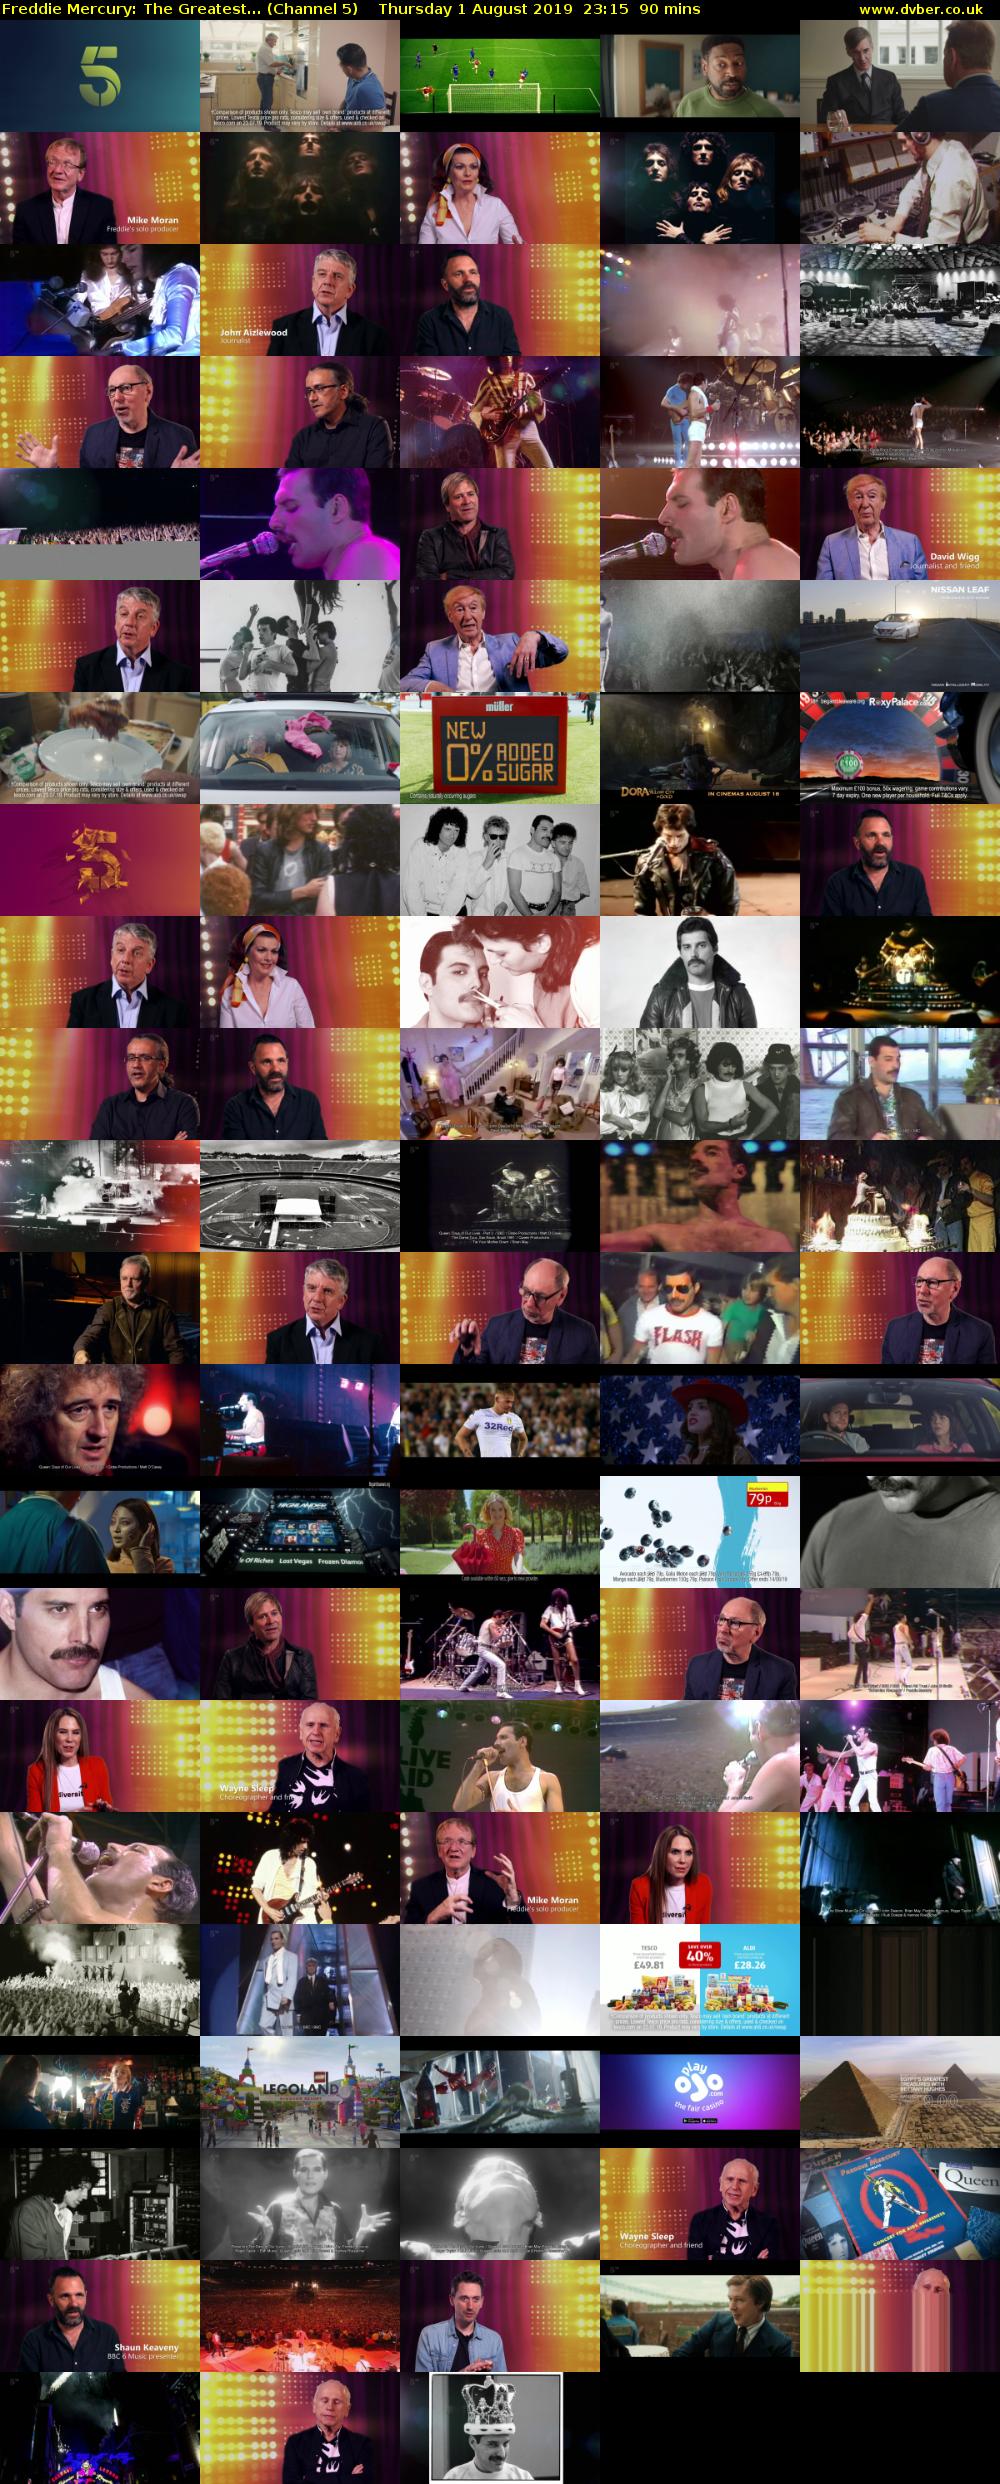 Freddie Mercury: The Greatest... (Channel 5) Thursday 1 August 2019 23:15 - 00:45